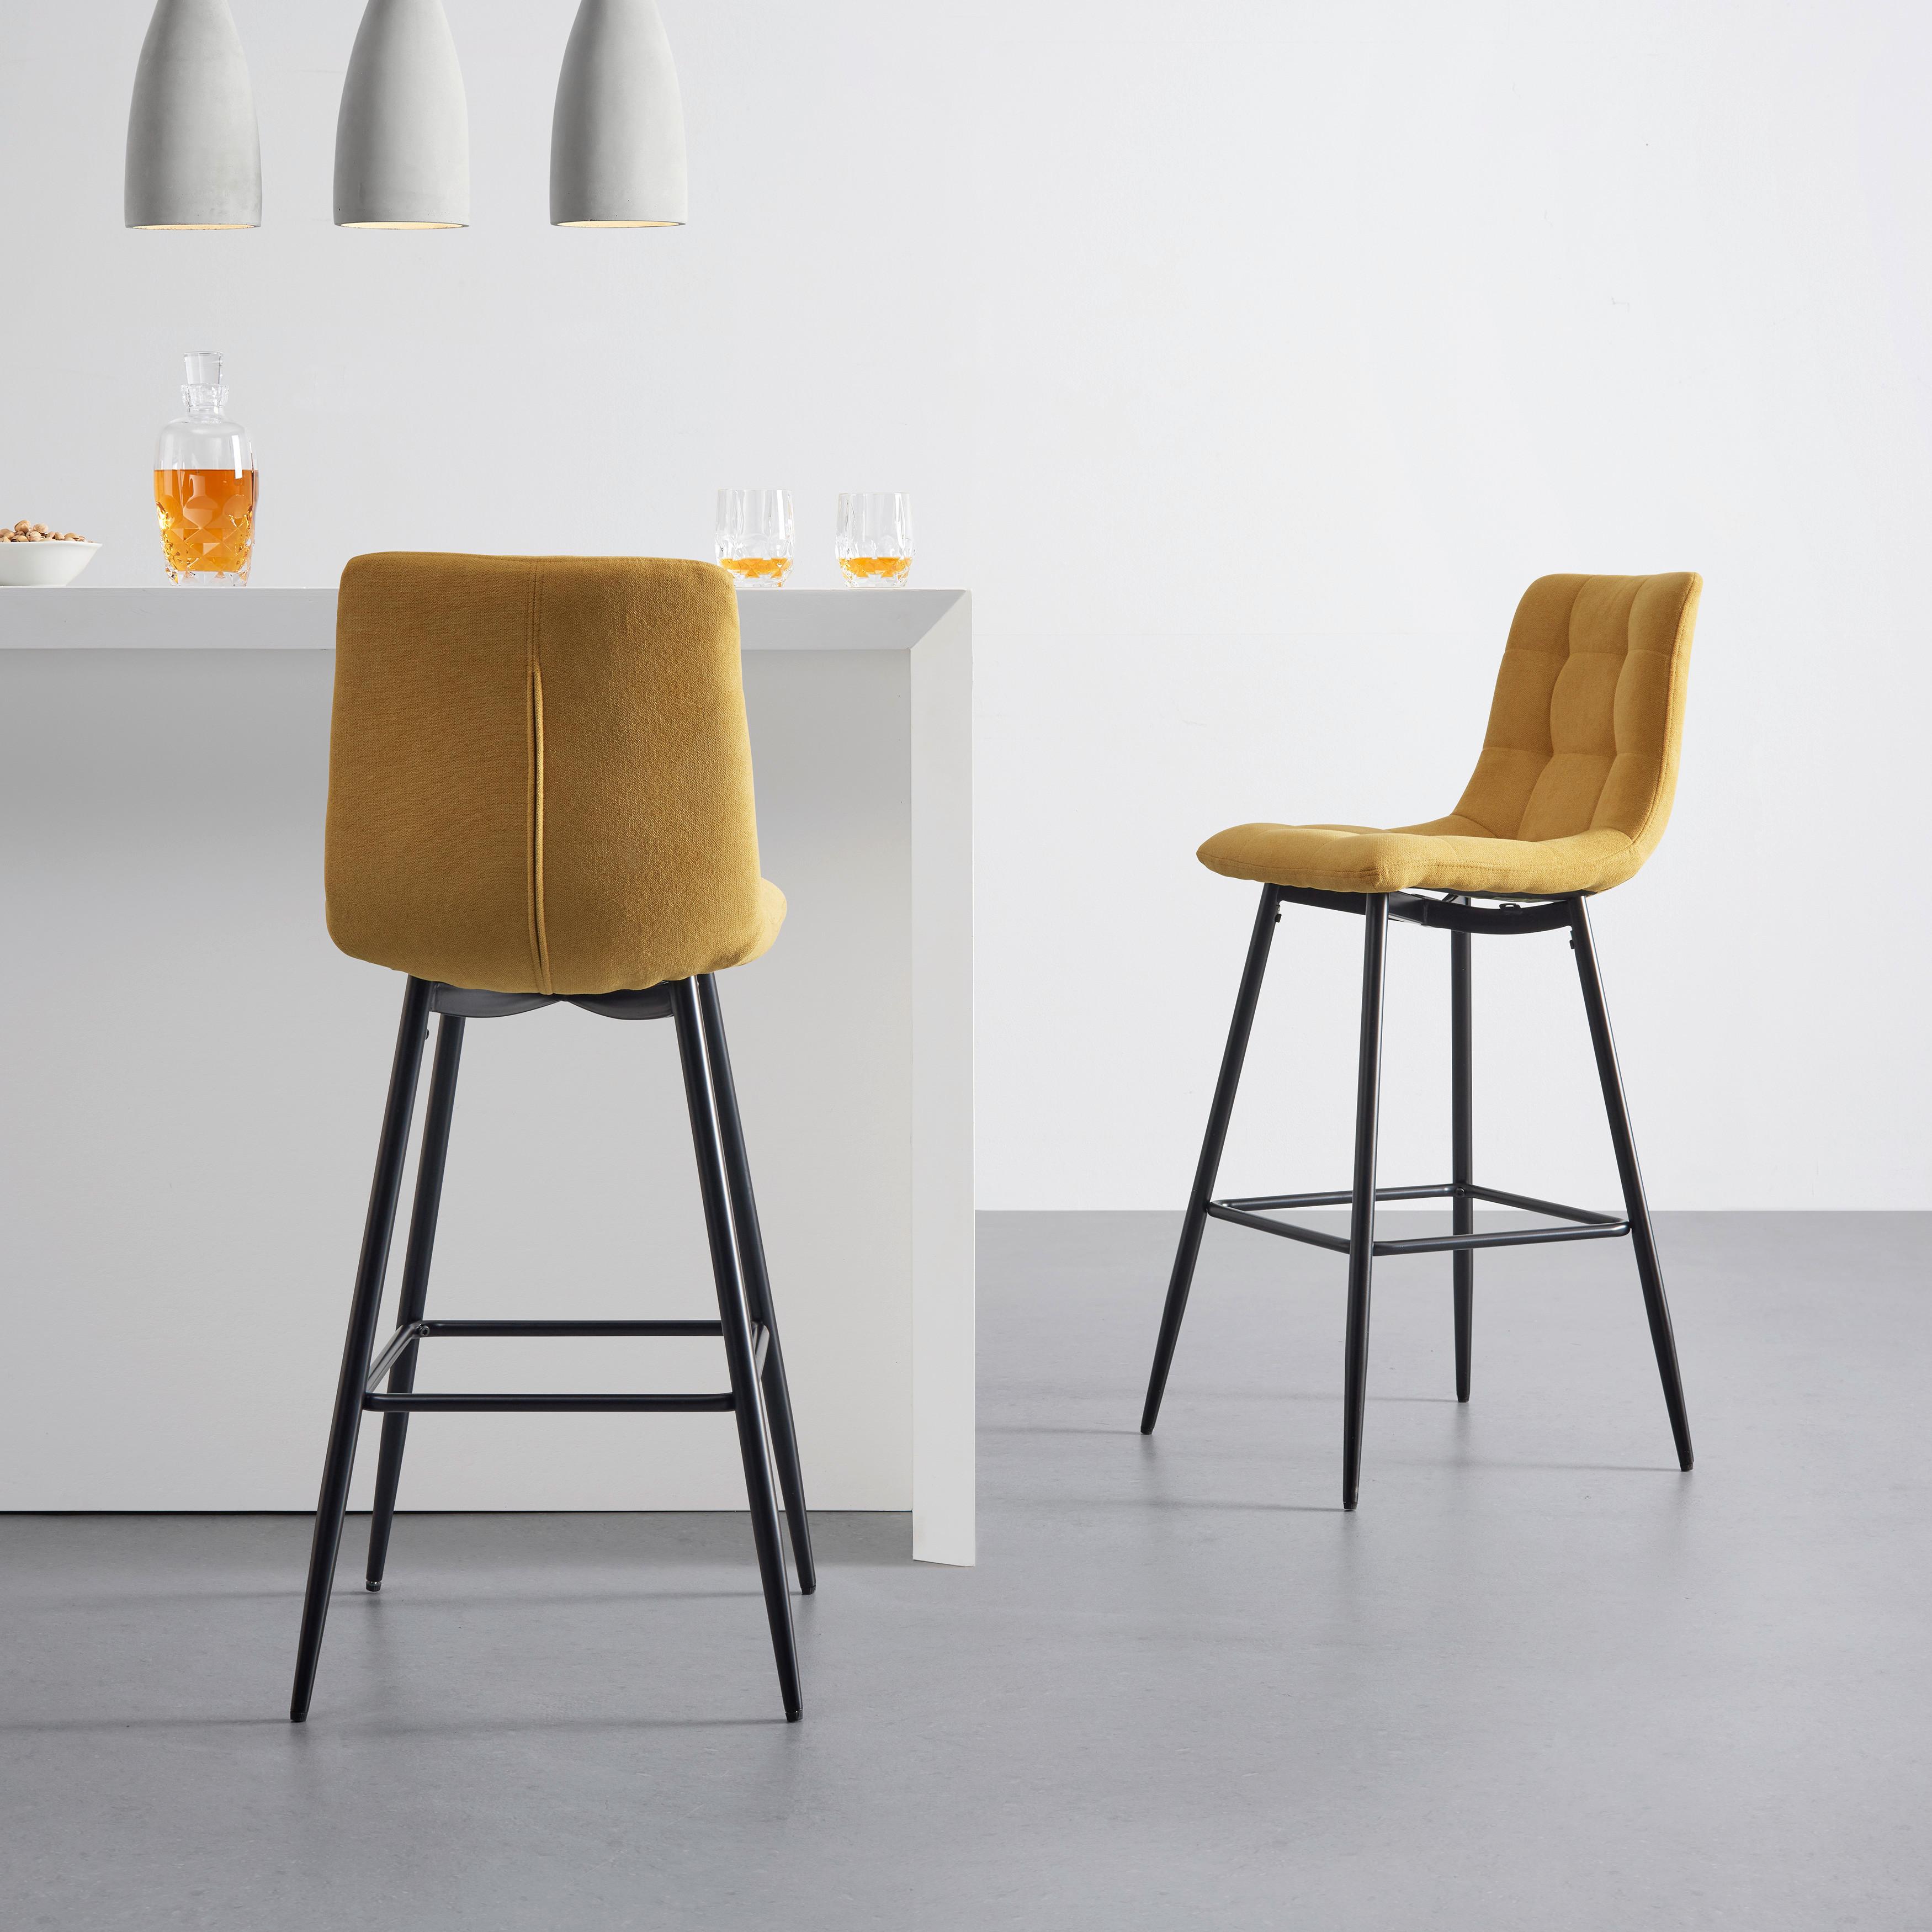 Sada Barových Židlí Luka Žlutá - černá/žlutá, Moderní, kov/dřevo (42,5/100/49cm) - P & B